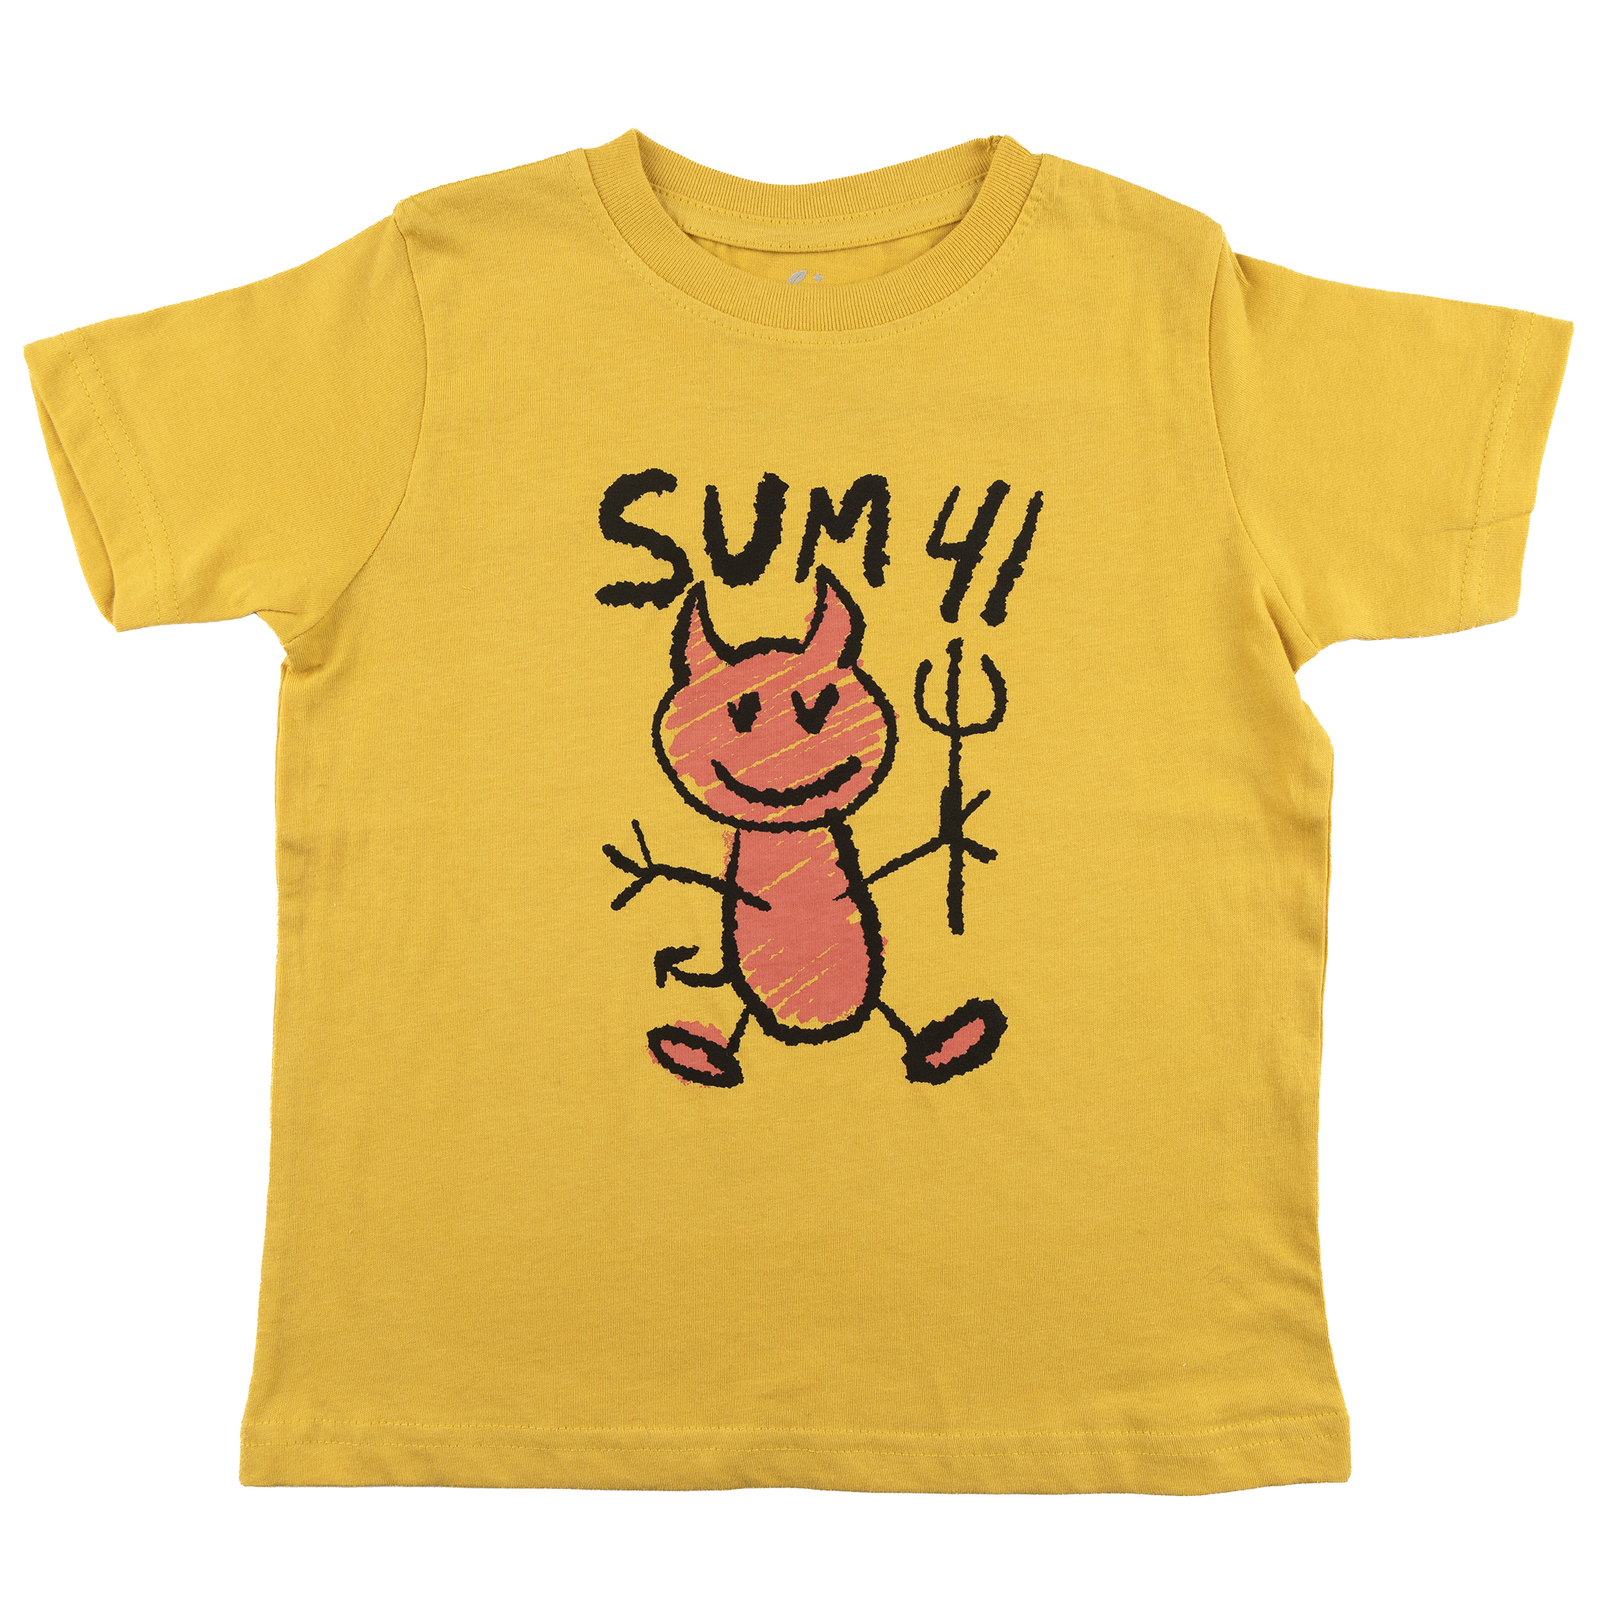 Sum 41 "Devil" Toddler T-Shirt